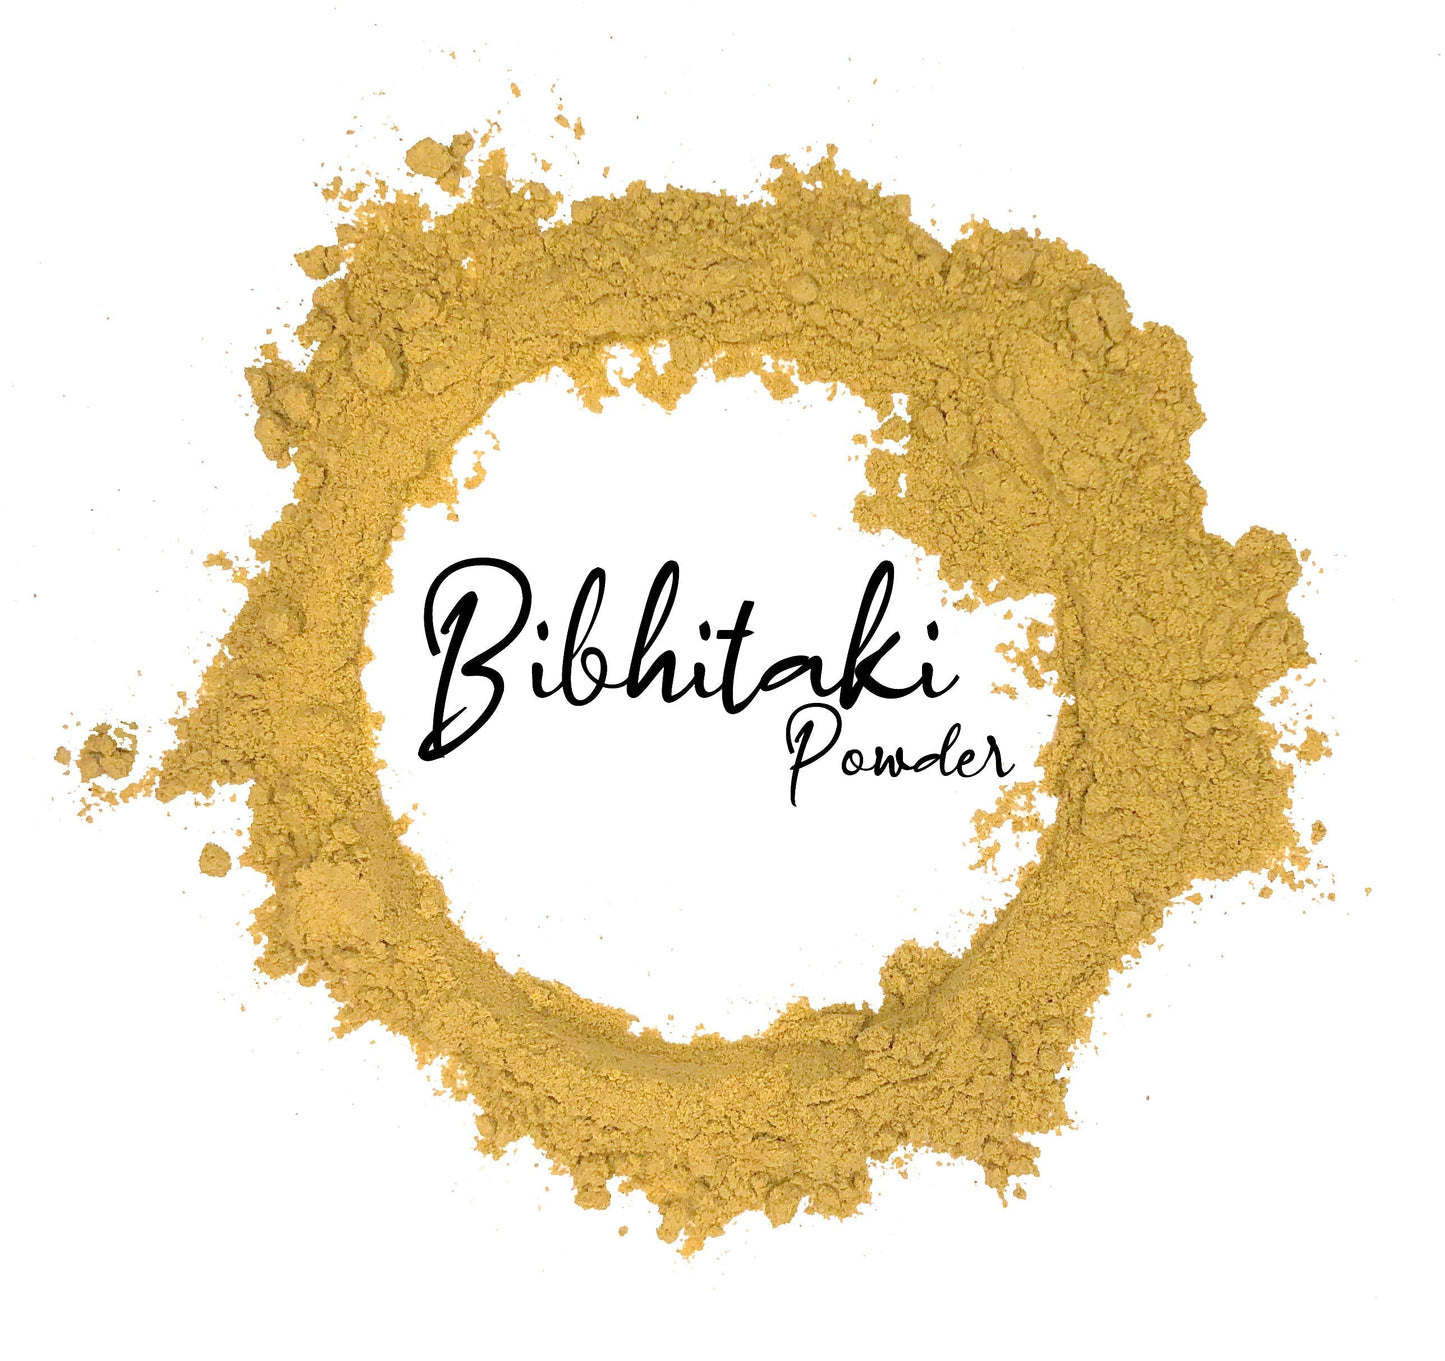 Wholesale Spices & Herbs - Bibhitaki Powder, Organic 1 lb (454g) Bag